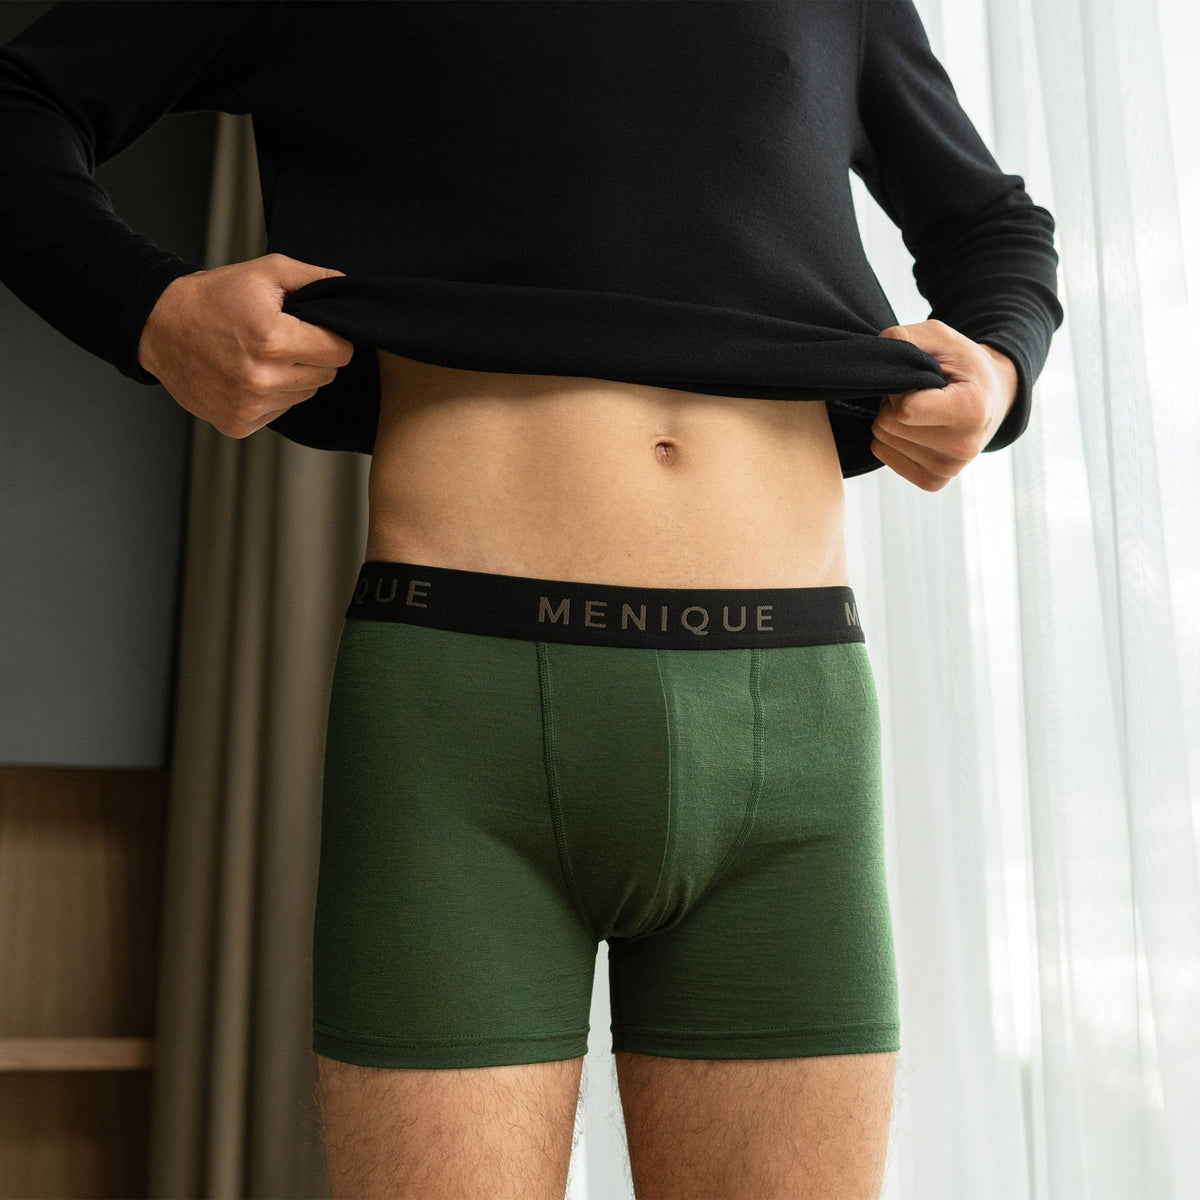 MENIQUE 100% Merino Wool Mens Short Boxers Dark Green